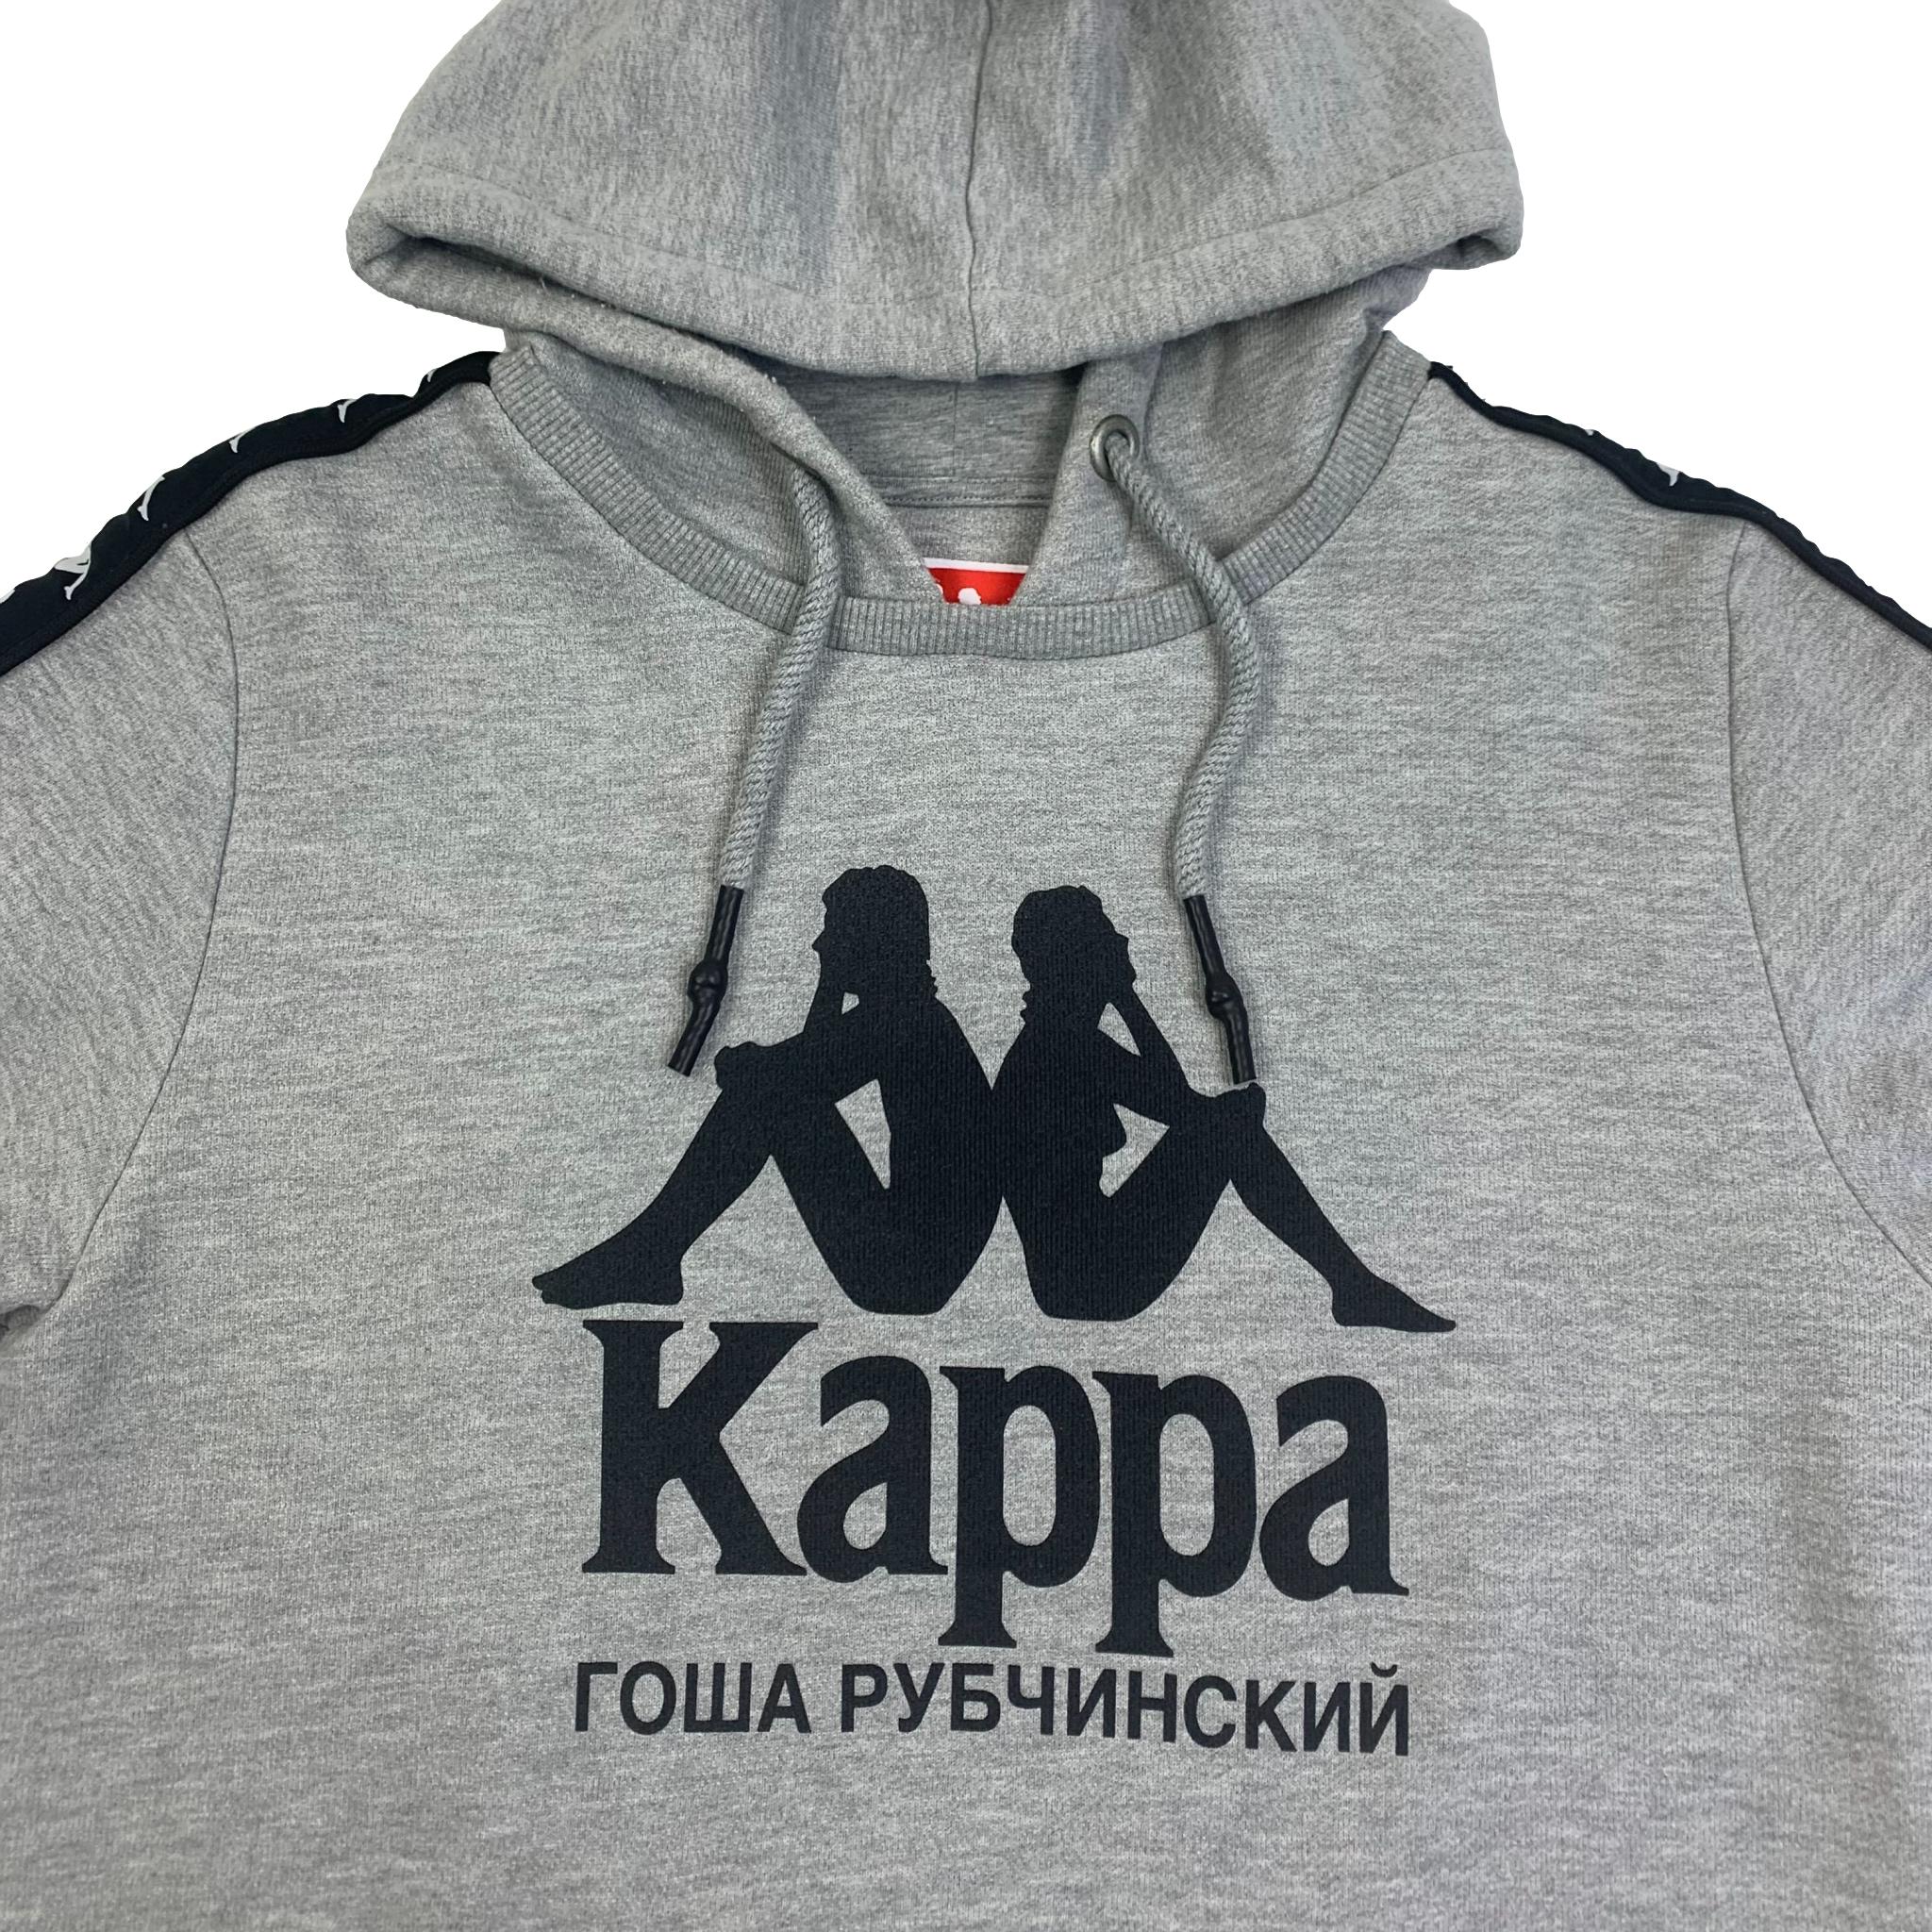 Verbetering Ringlet gewicht Gosha Rubchinskiy x Kappa Logo Hoodie – purchasegarments